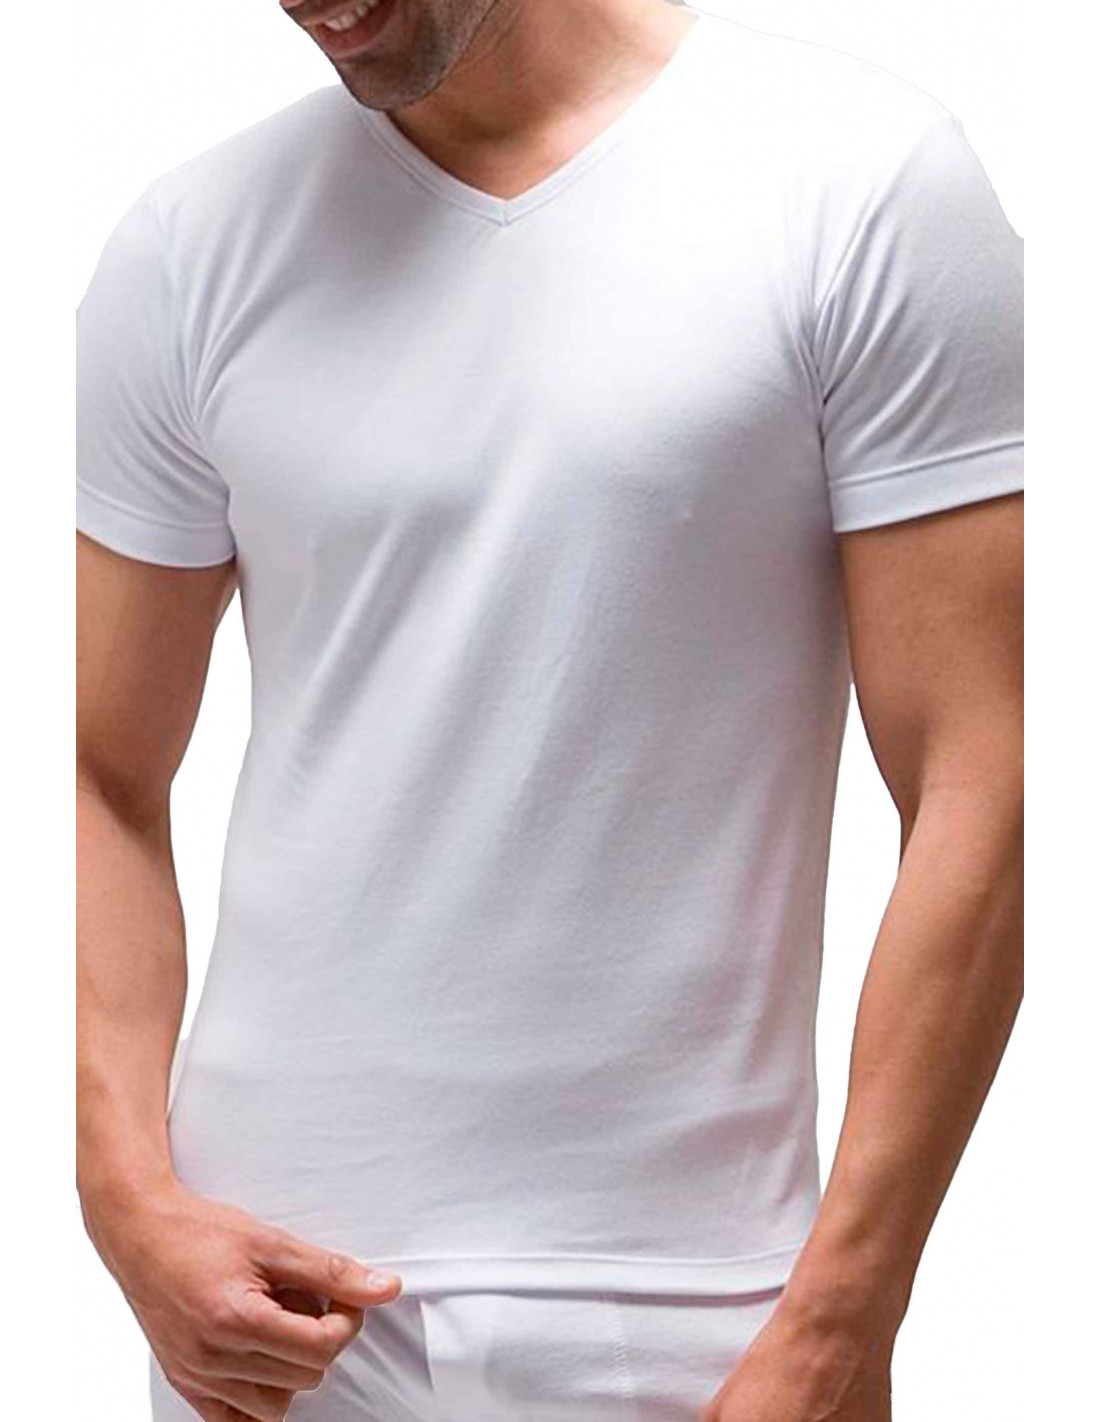 Camiseta manga larga algodón térmico “831”de la marca RAPIFE